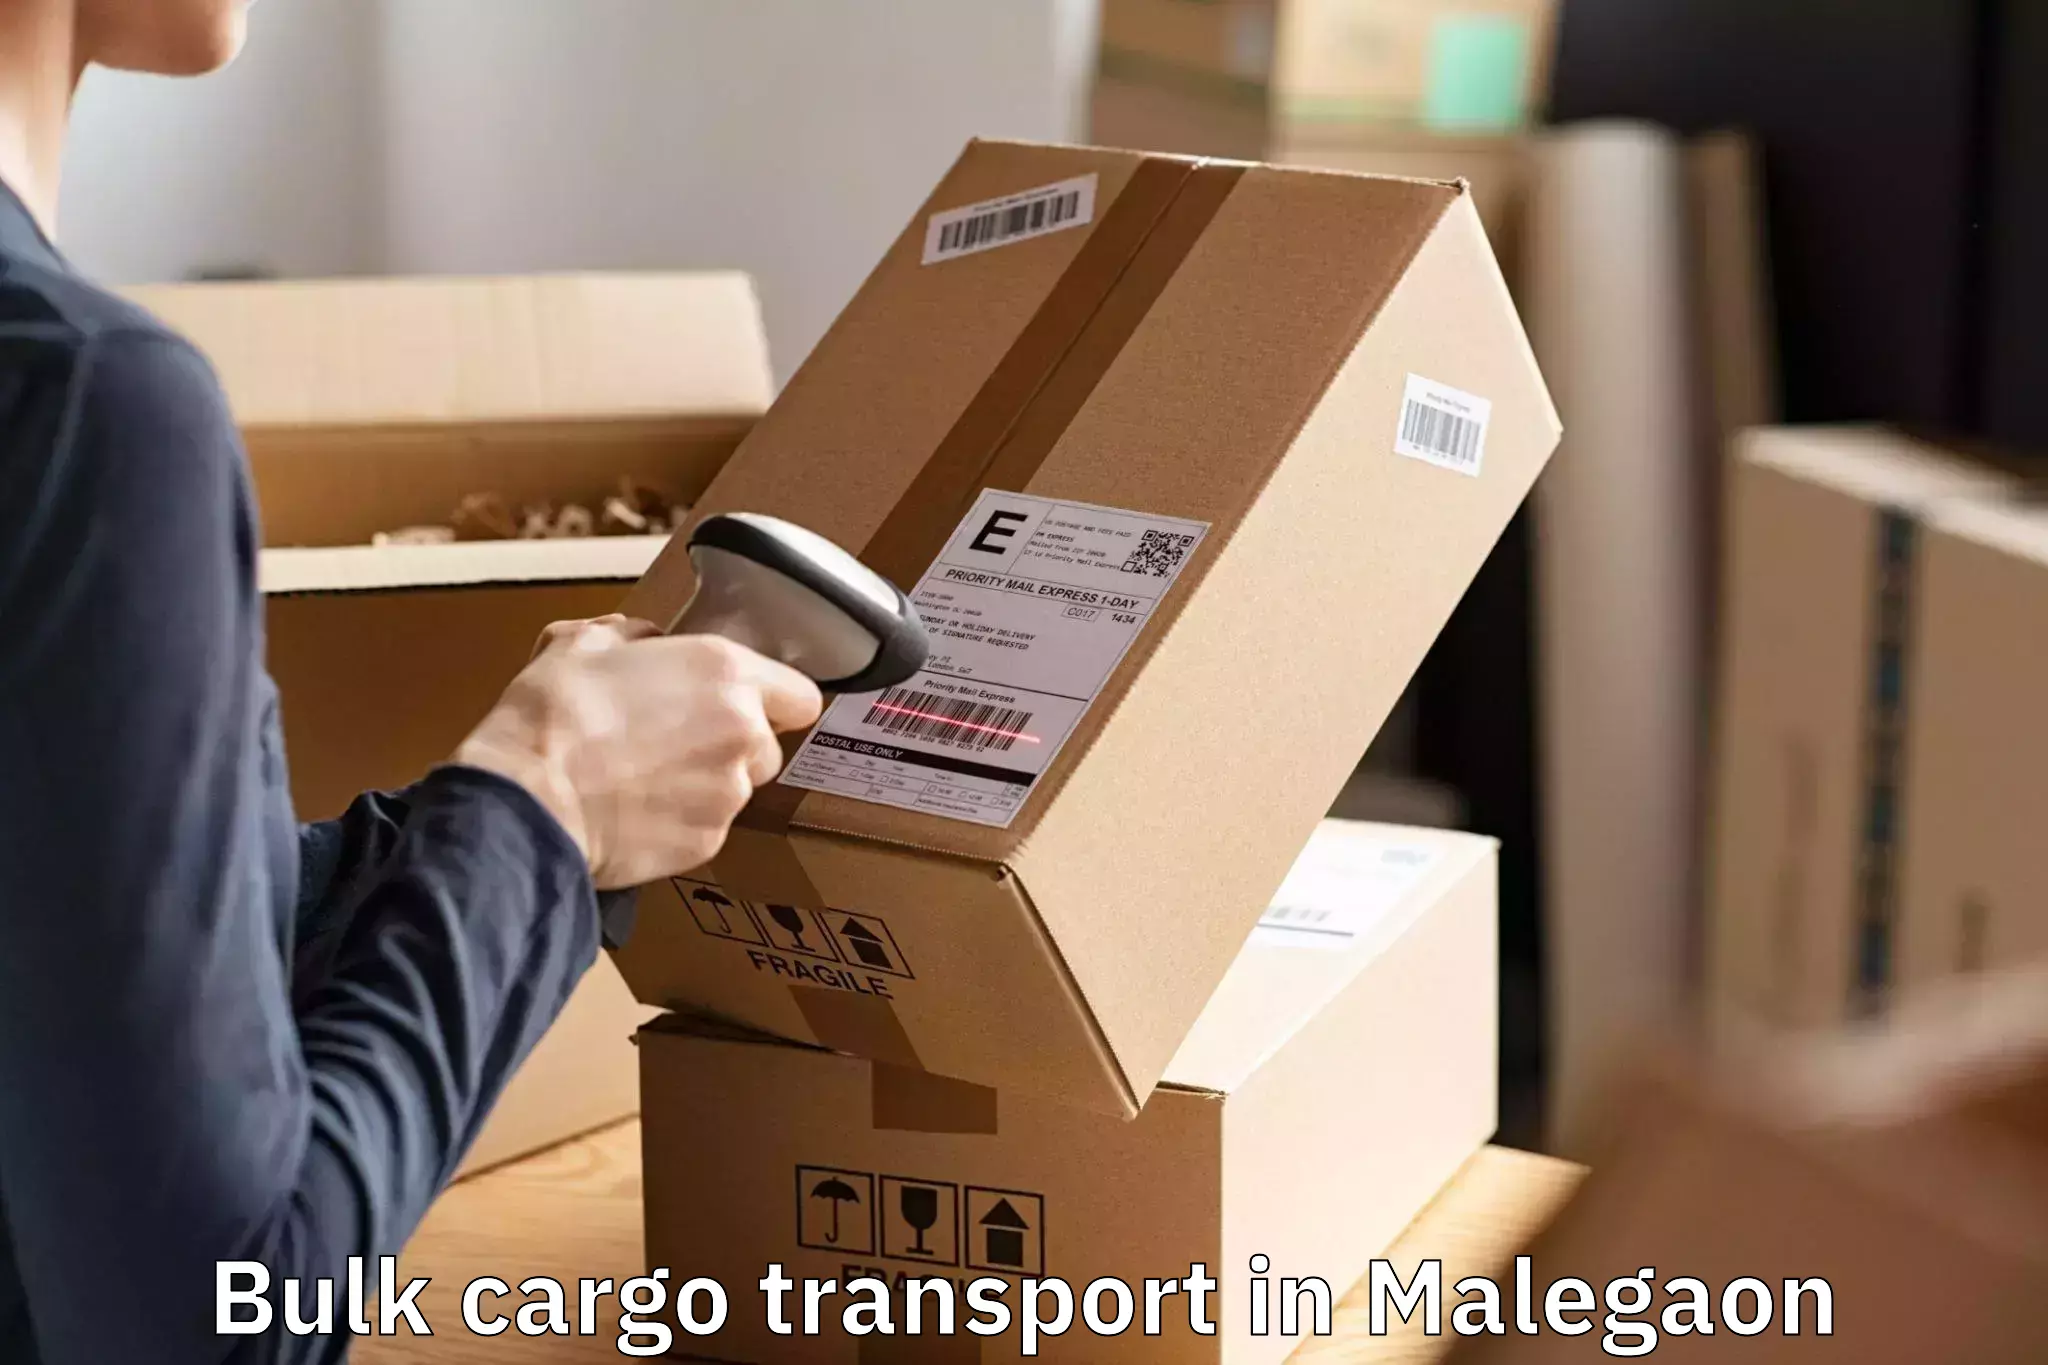 Easy Bulk Cargo Transport Booking in Malegaon, Maharashtra (MH)